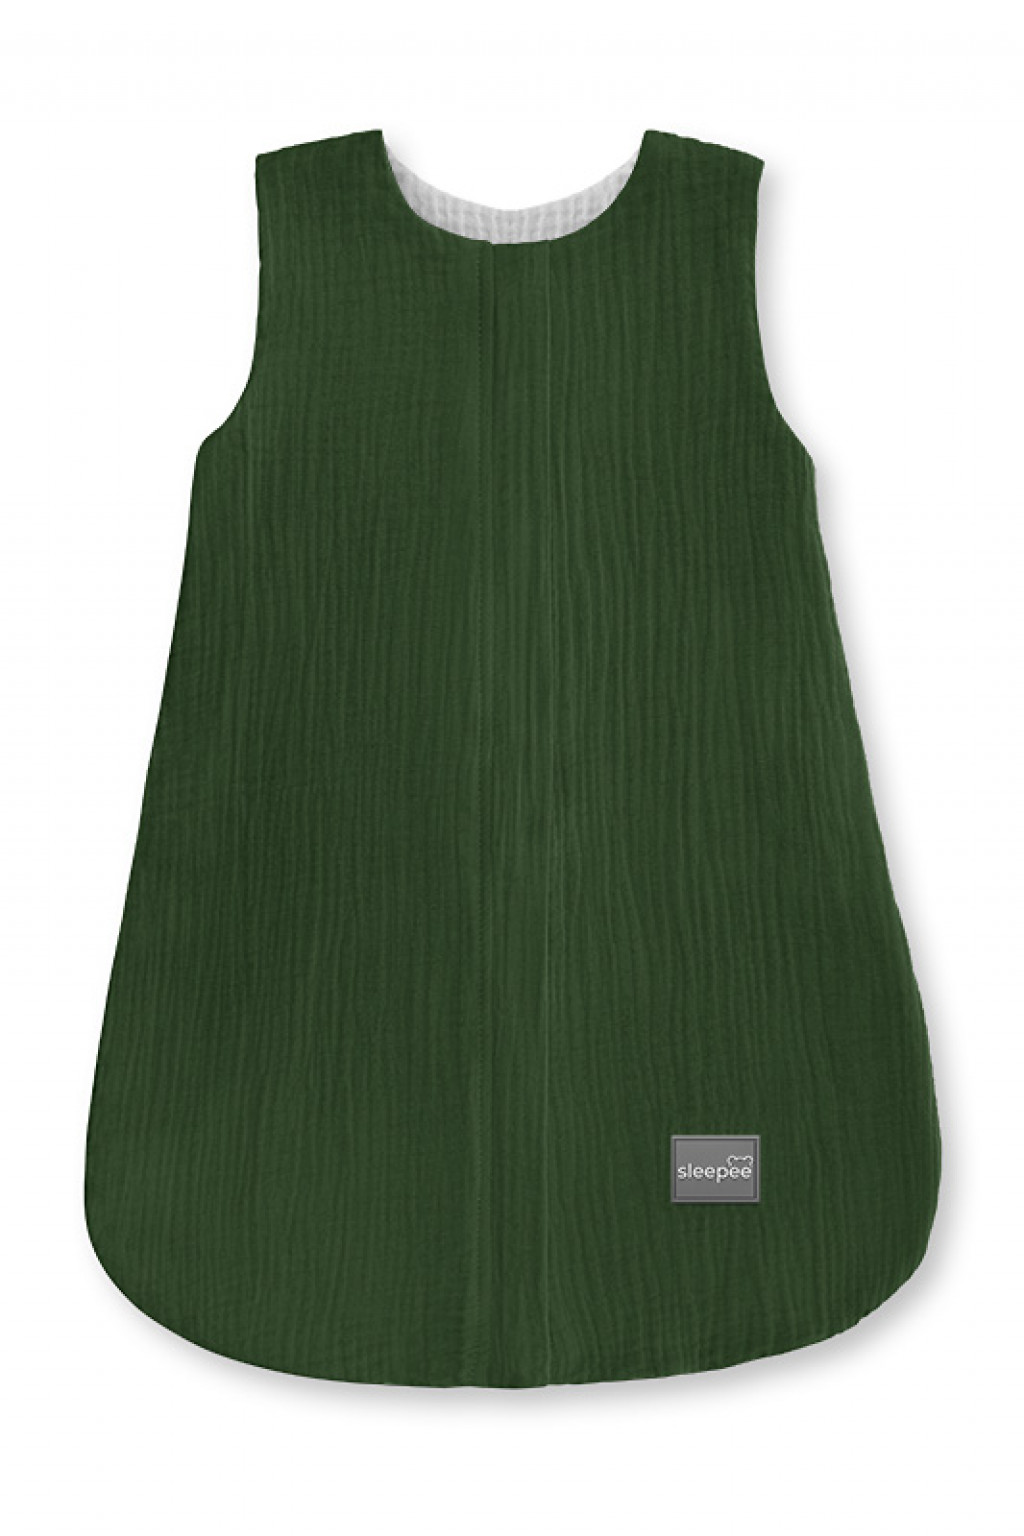 Sleepee Obojstranný ľahký mušelínový spací vak Bottle Green 0-4 mesiace S